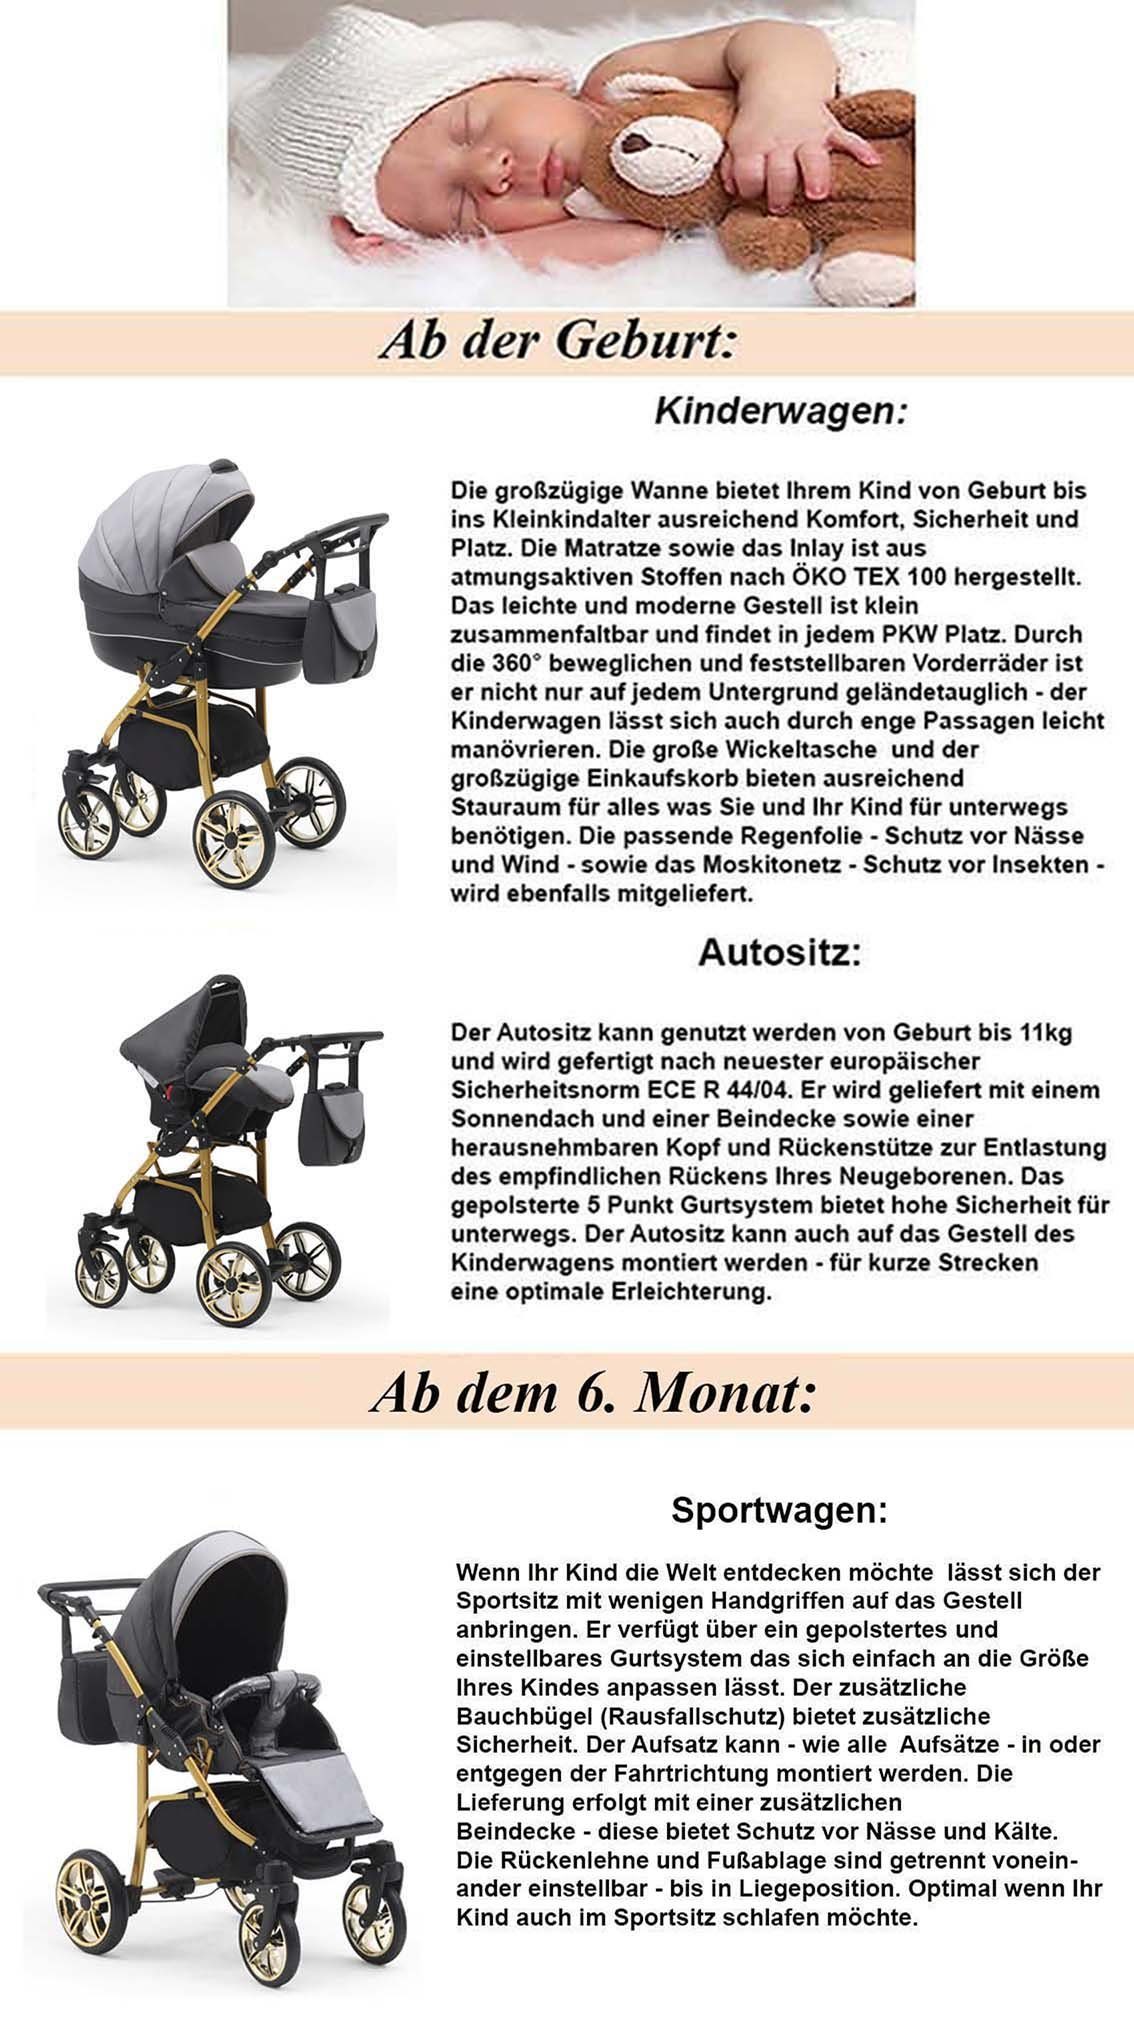 2 Kombi-Kinderwagen babies-on-wheels Teile Kinderwagen-Set 1 Weiß-Bordeaux-Schwarz - in Gold 13 46 in Cosmo - Farben